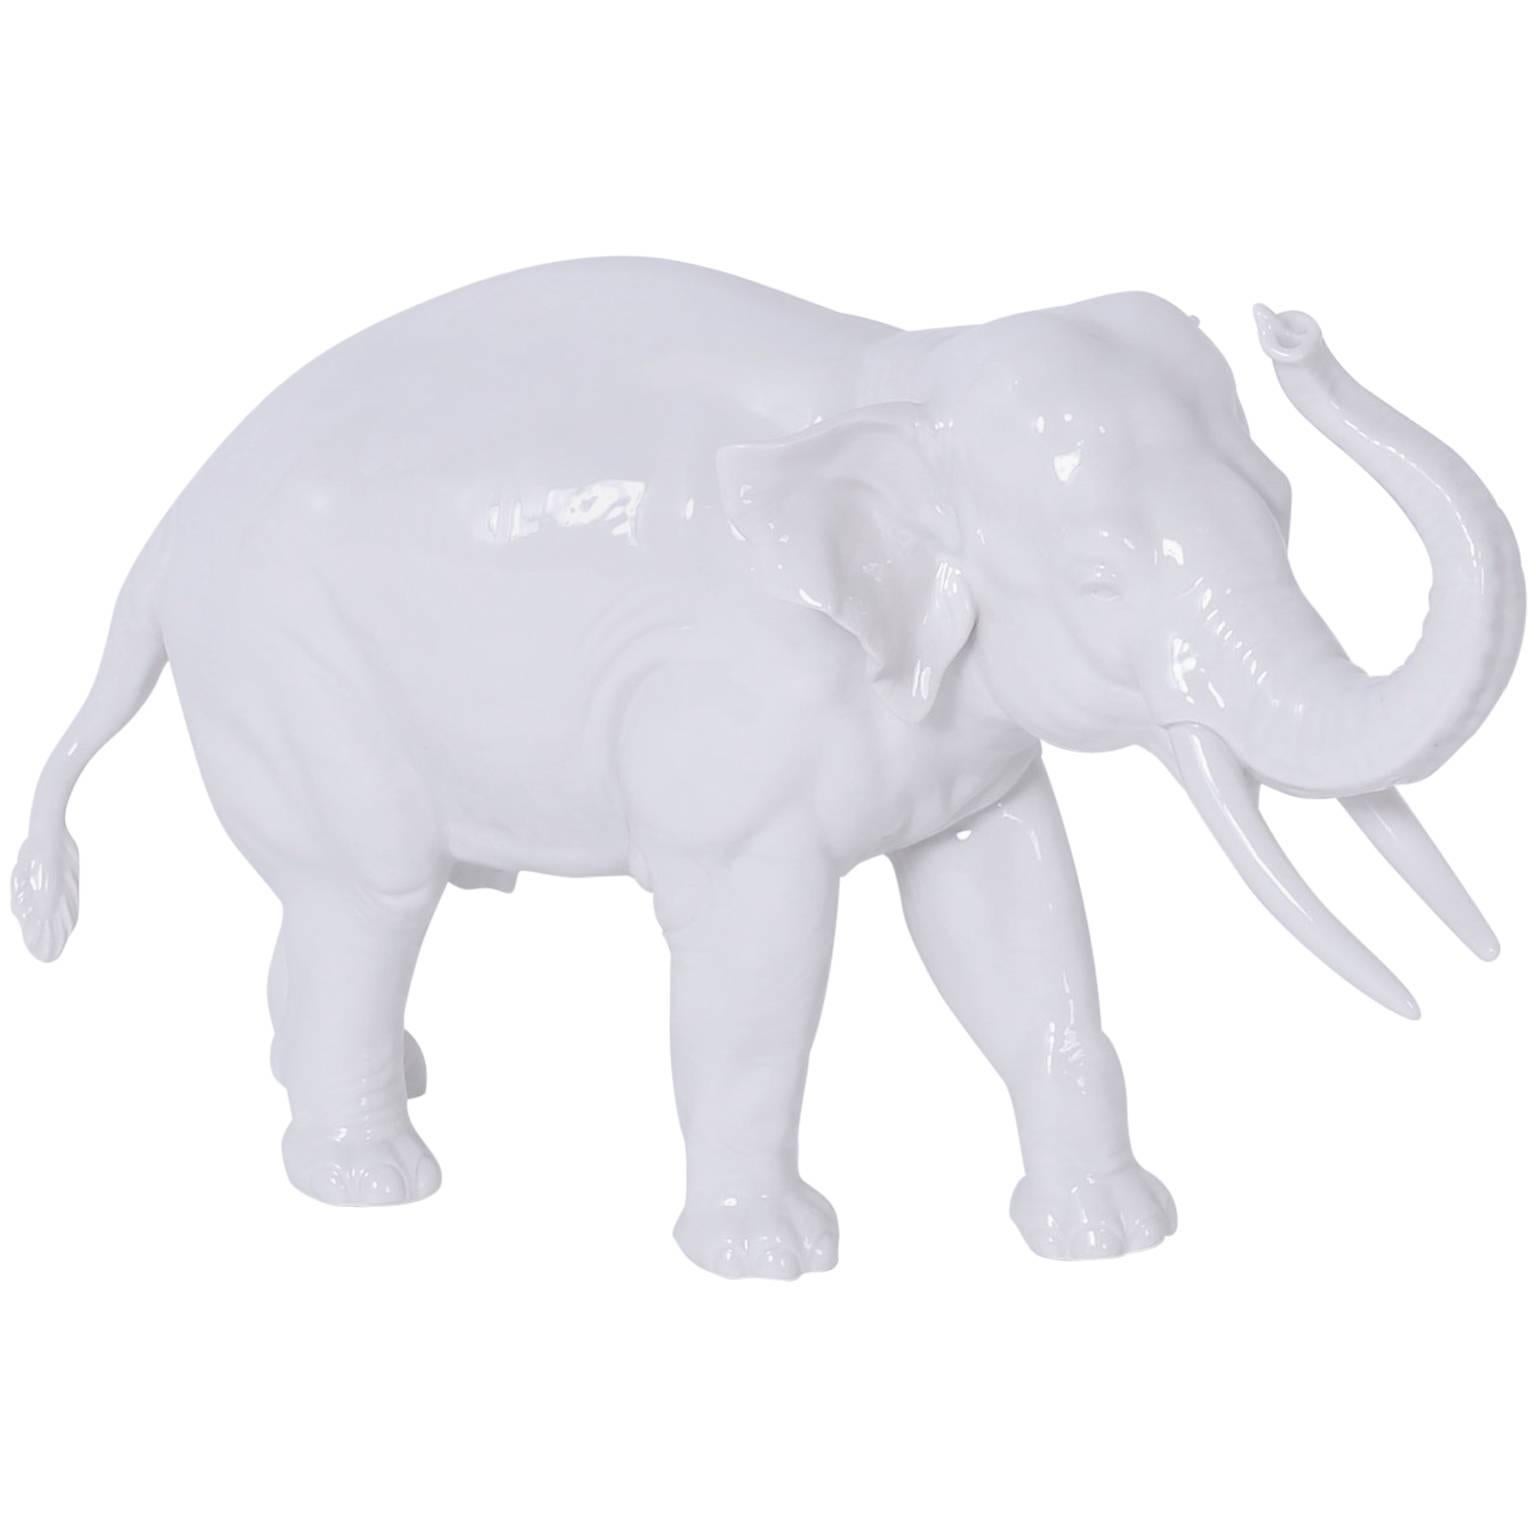 Numphenberg Porcelain Elephant with a White Glaze